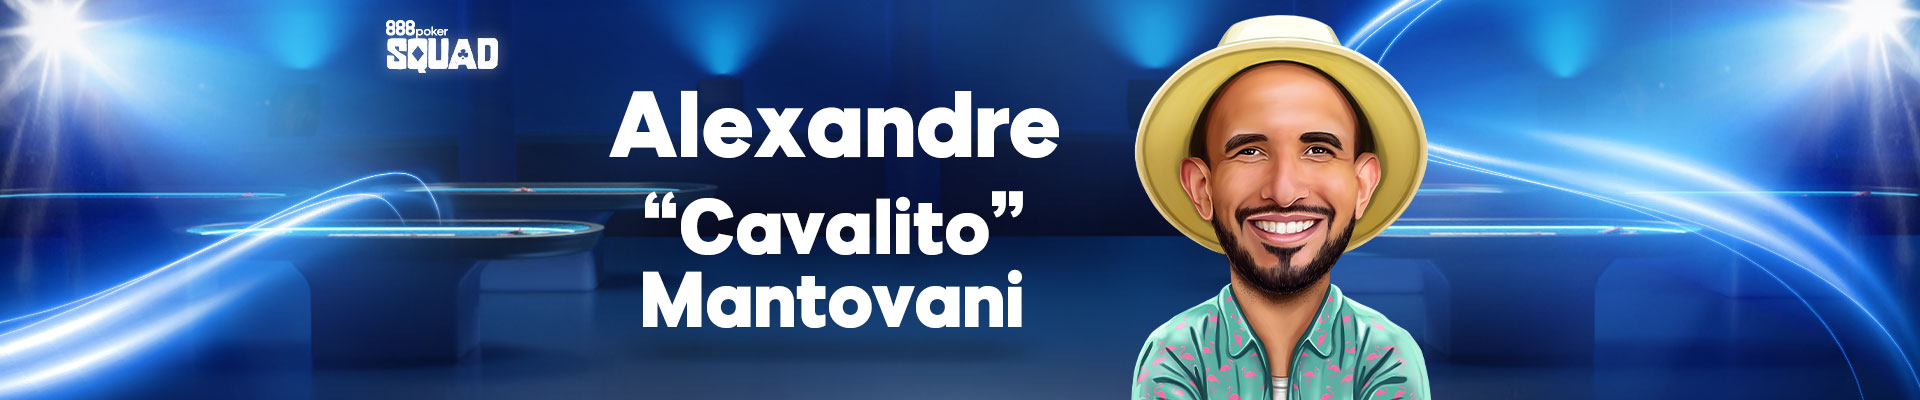 Alexandre “Cavalito” Mantovani